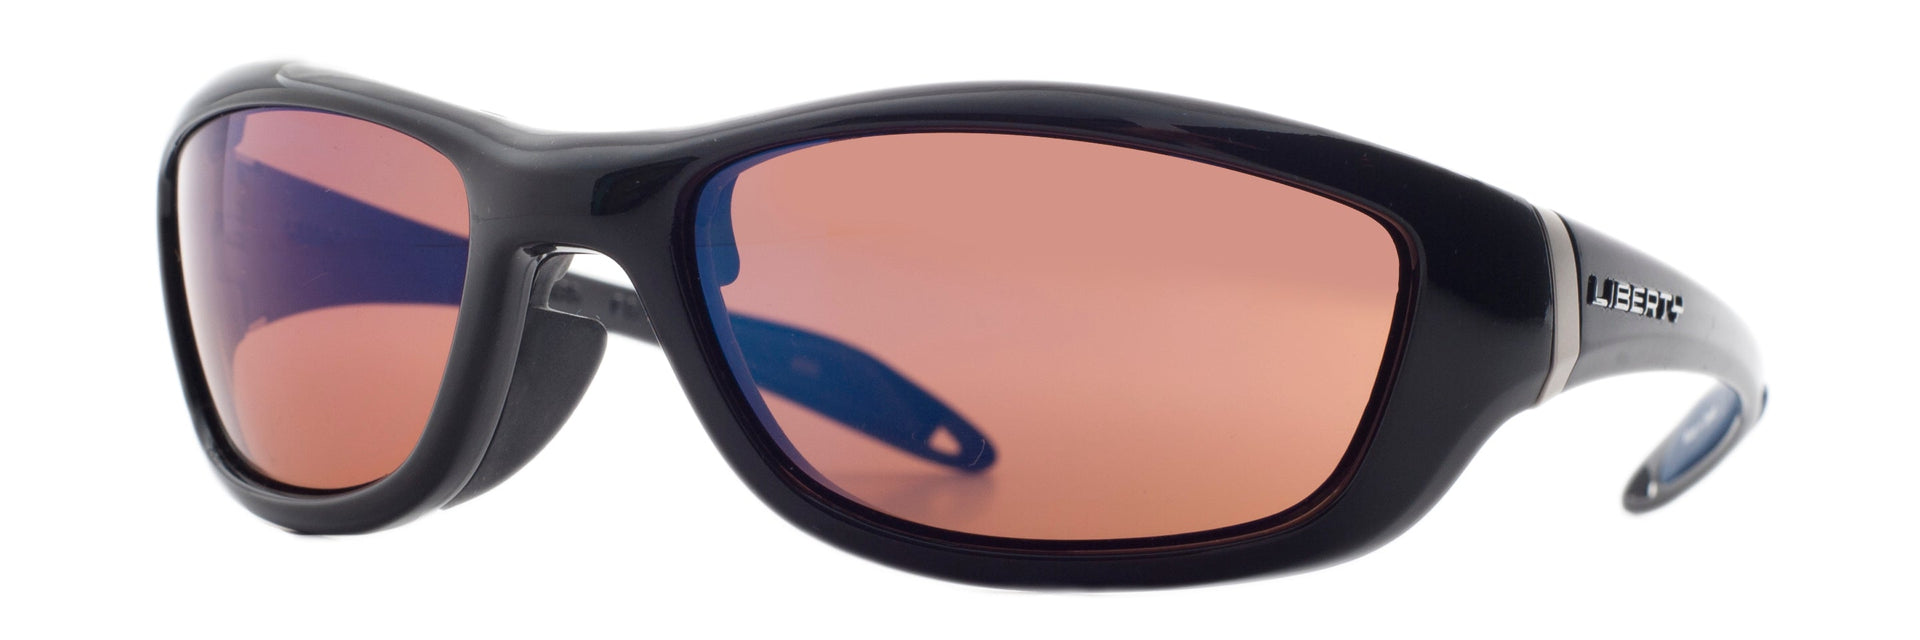 Mirrored Sunglasses vs. Polarized Sunglasses, Liberty Sport